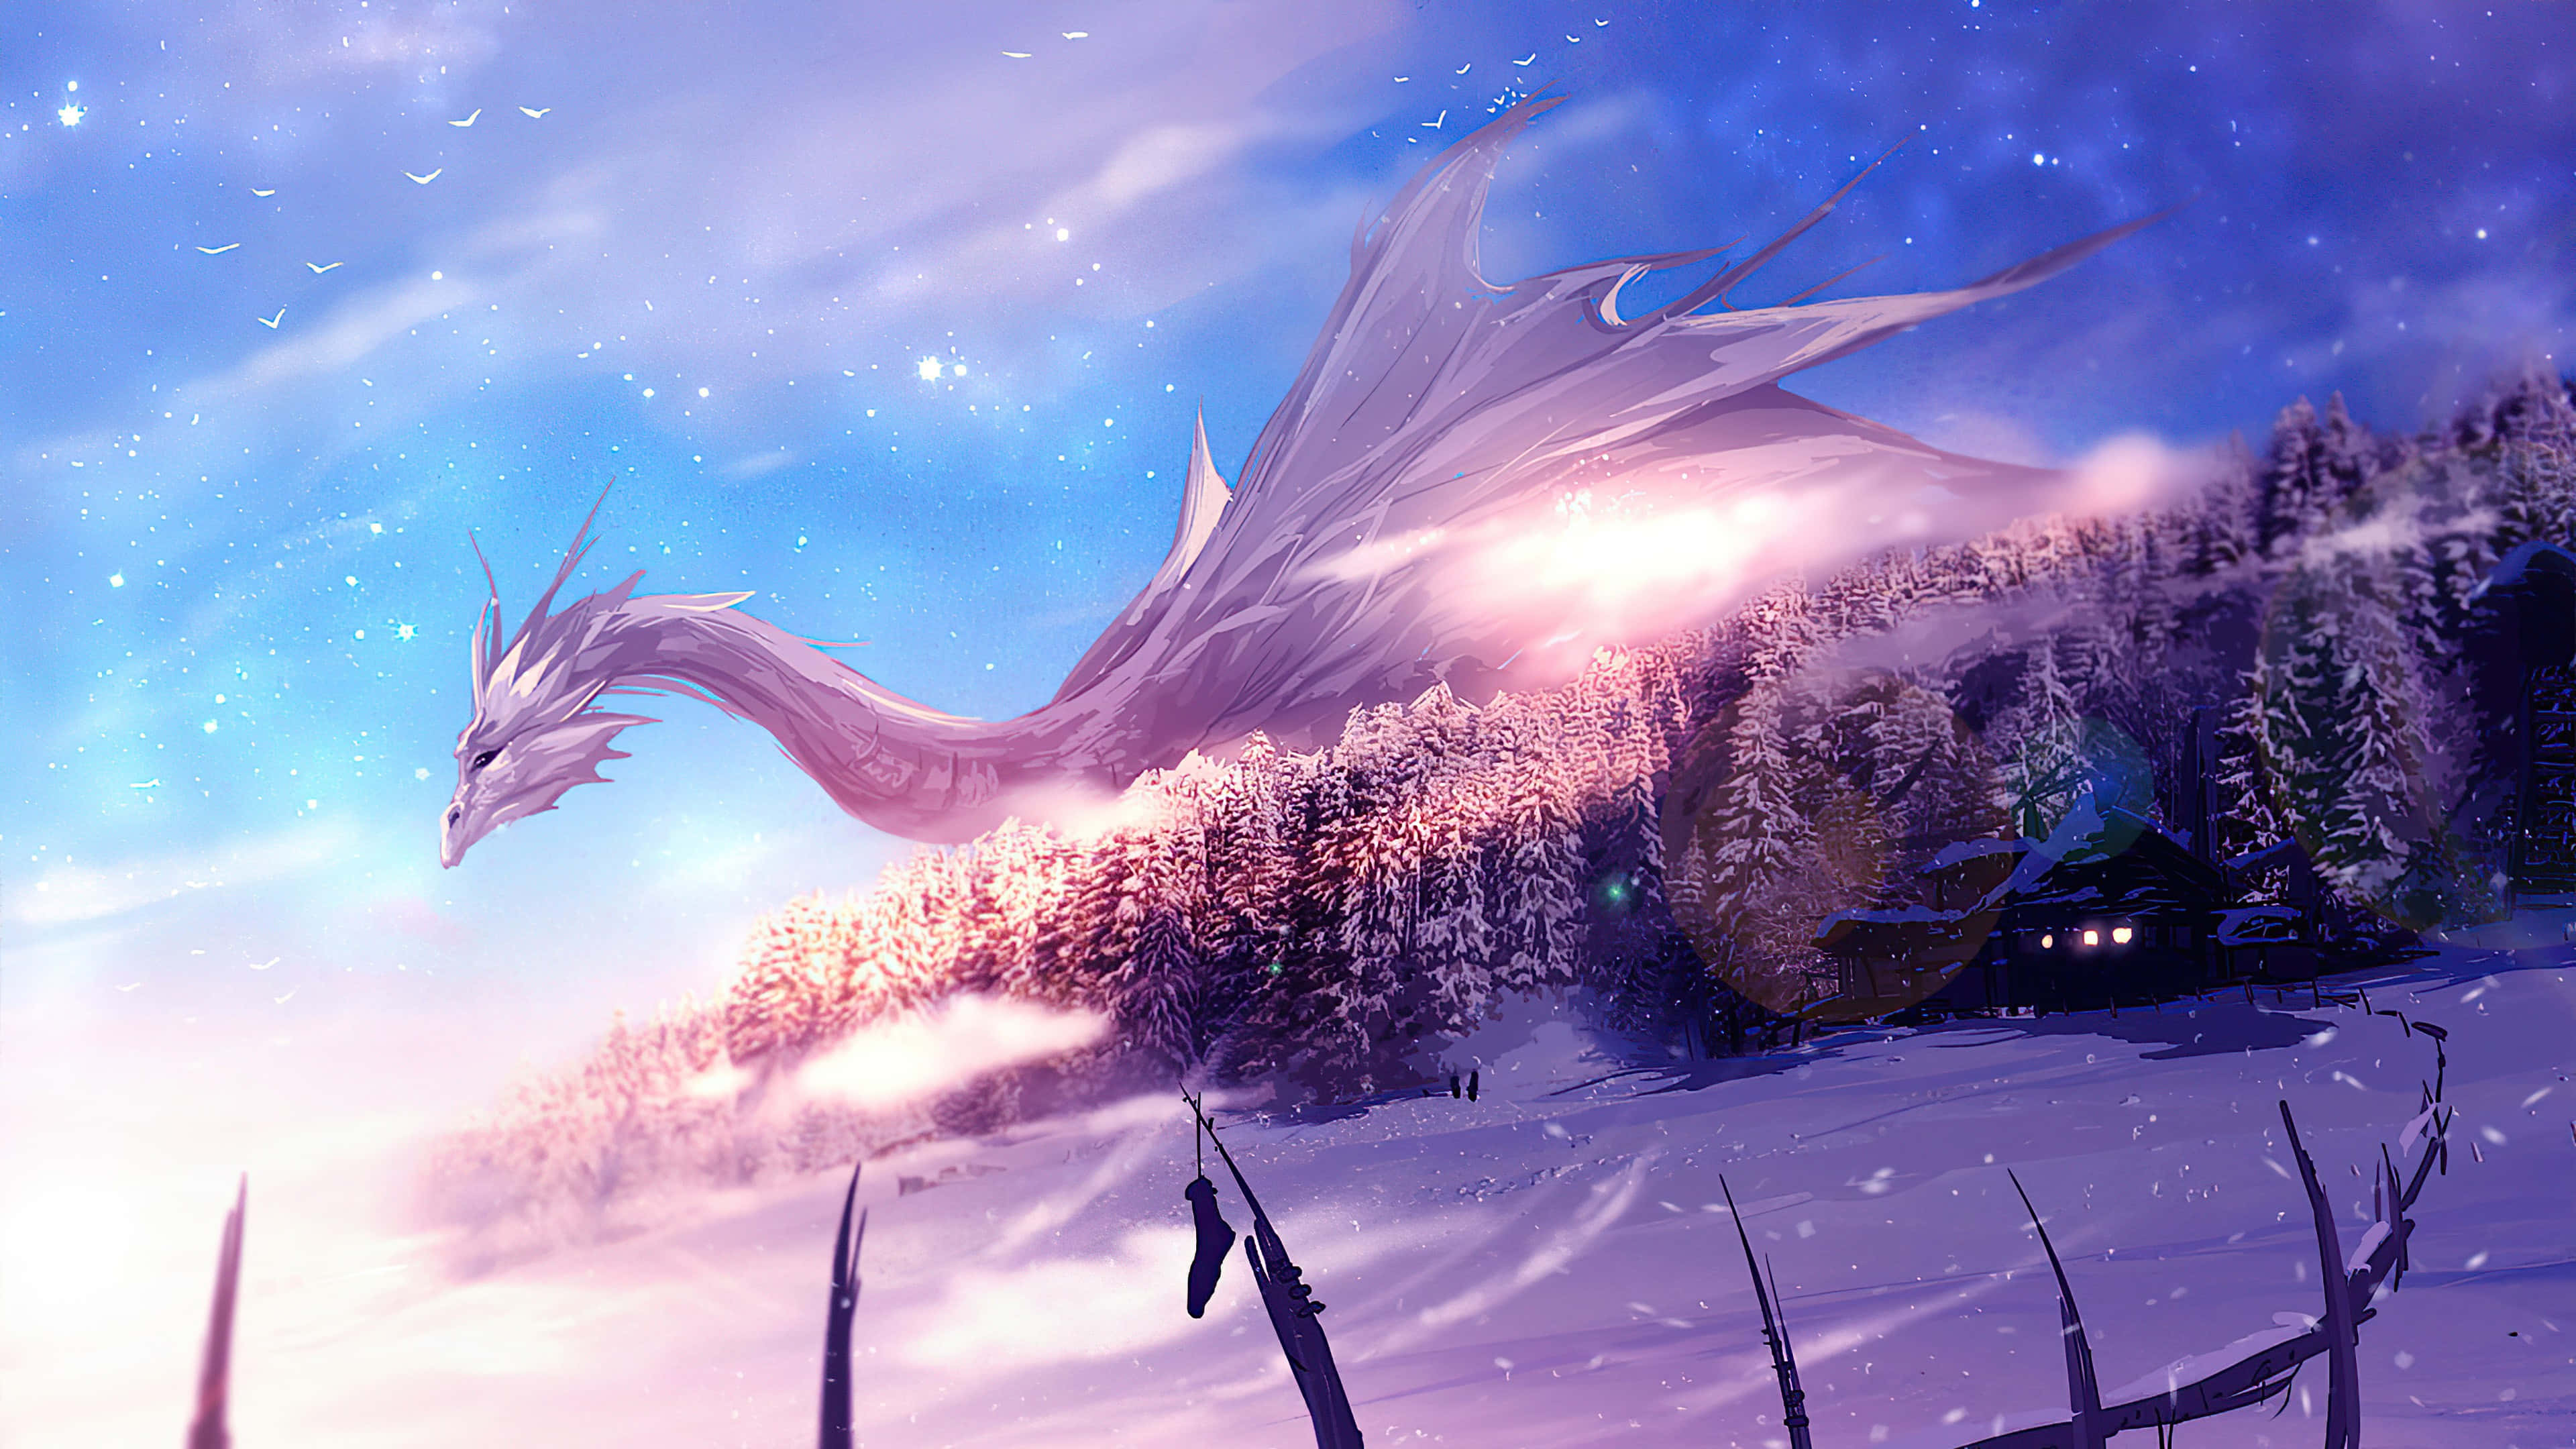 Majestic Dragon Unleashing Fire In A Fantasy World Wallpaper